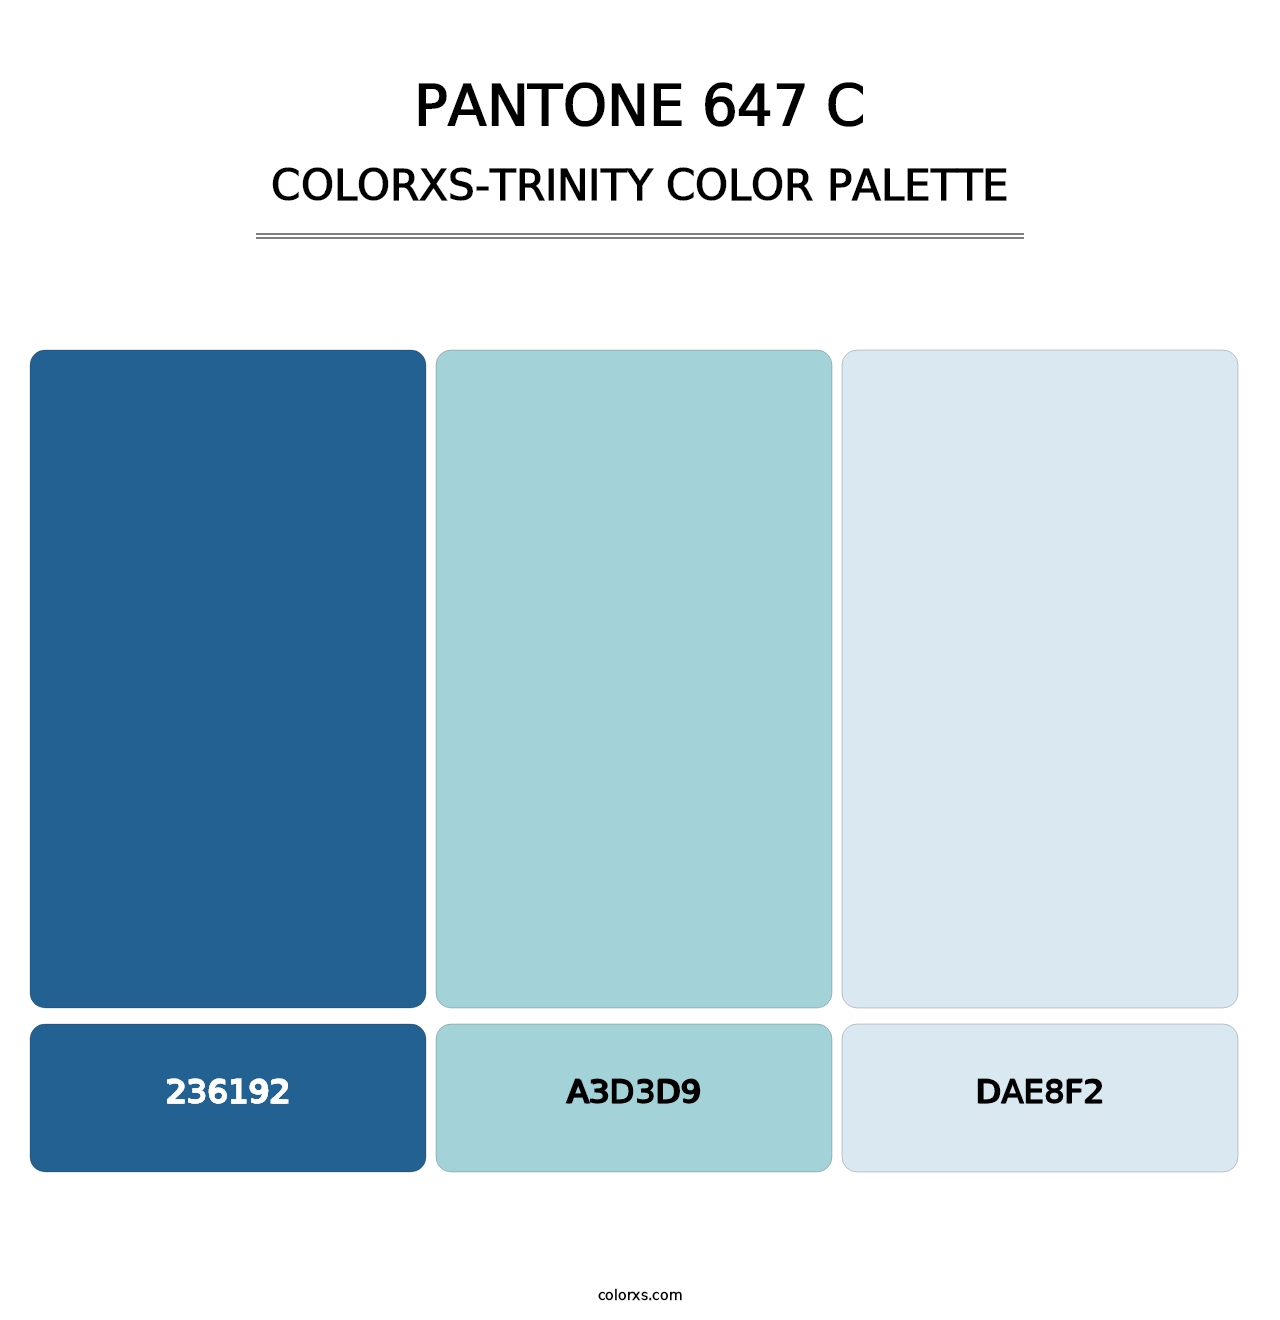 PANTONE 647 C - Colorxs Trinity Palette